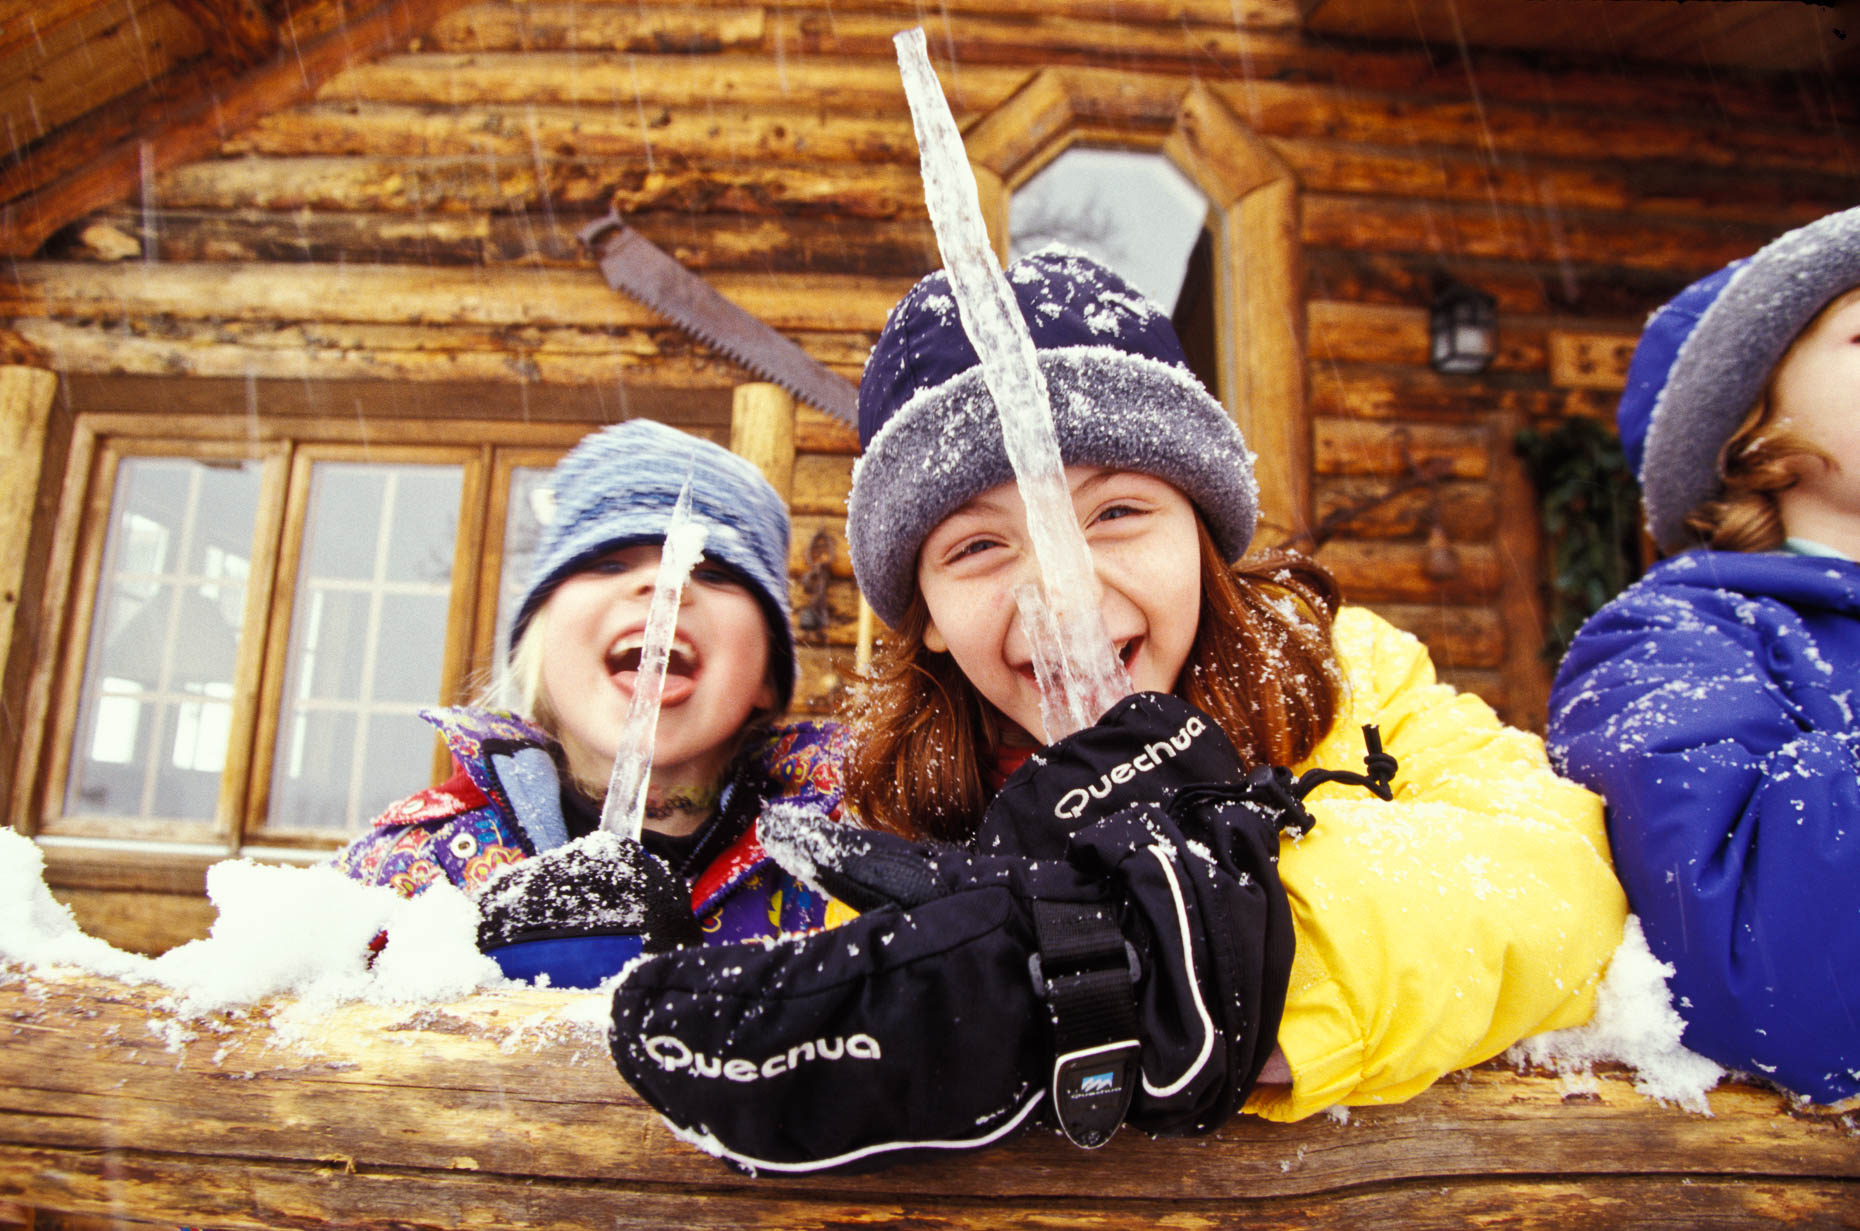 Girls licking icicle on porch of cabin at Vista Verde Ranch, Colorado by David Zaitz